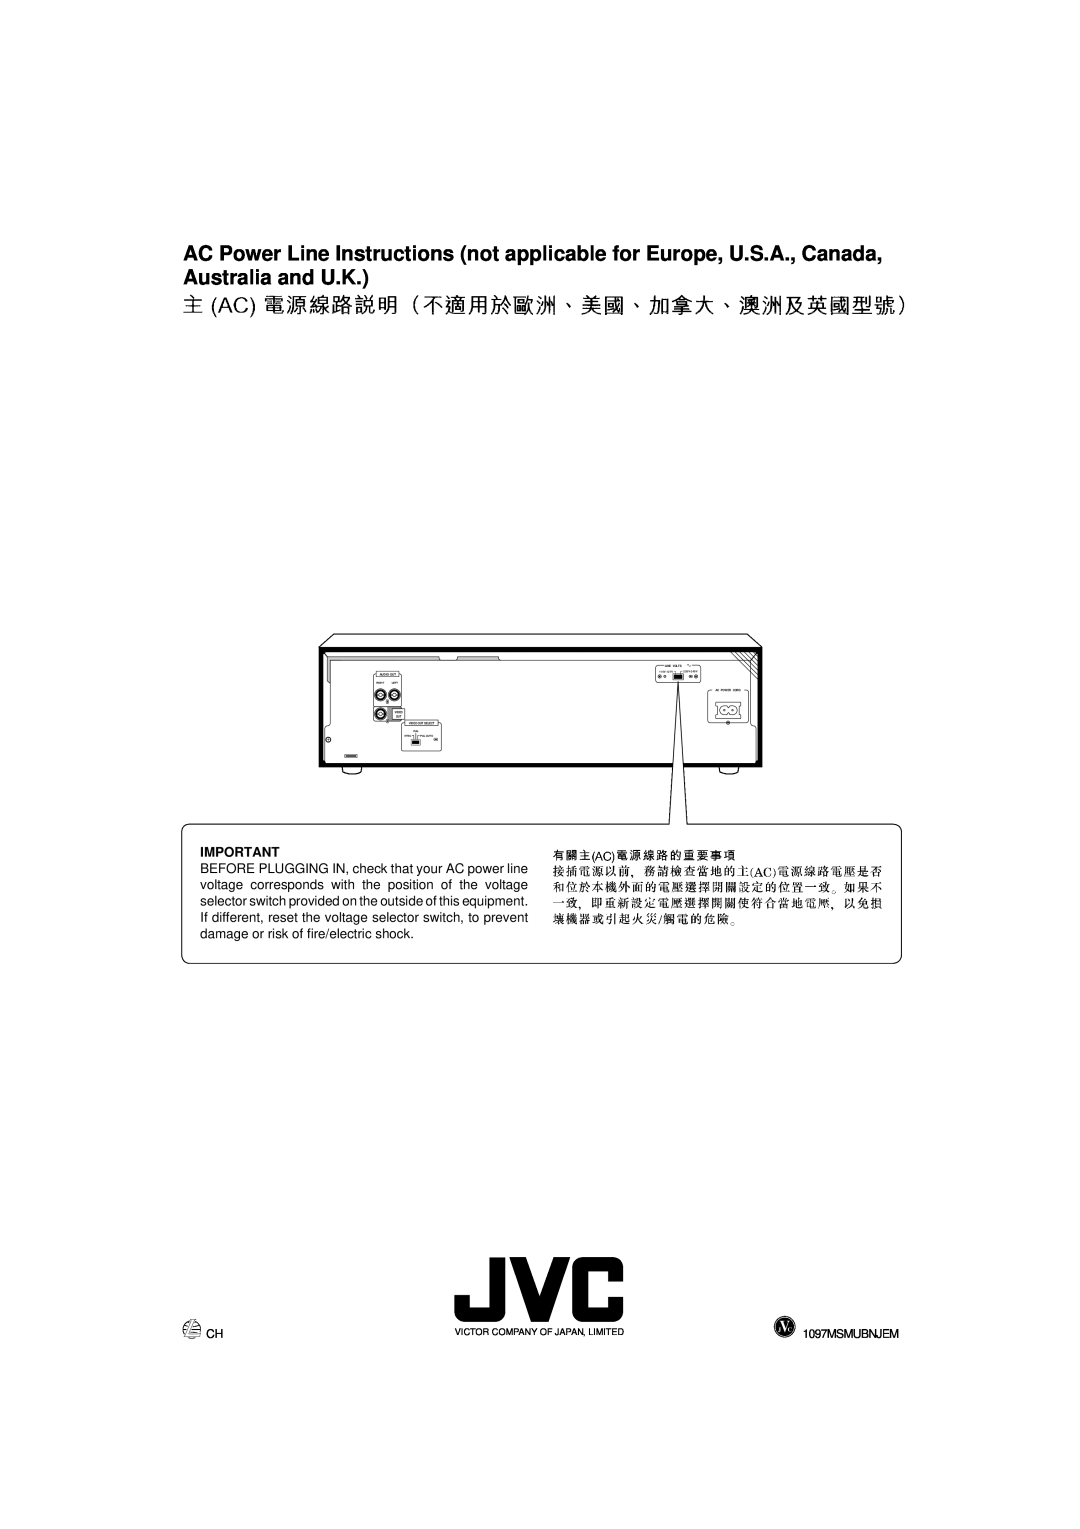 JVC XL-SV23GD manual 1097MSMUBNJEM 